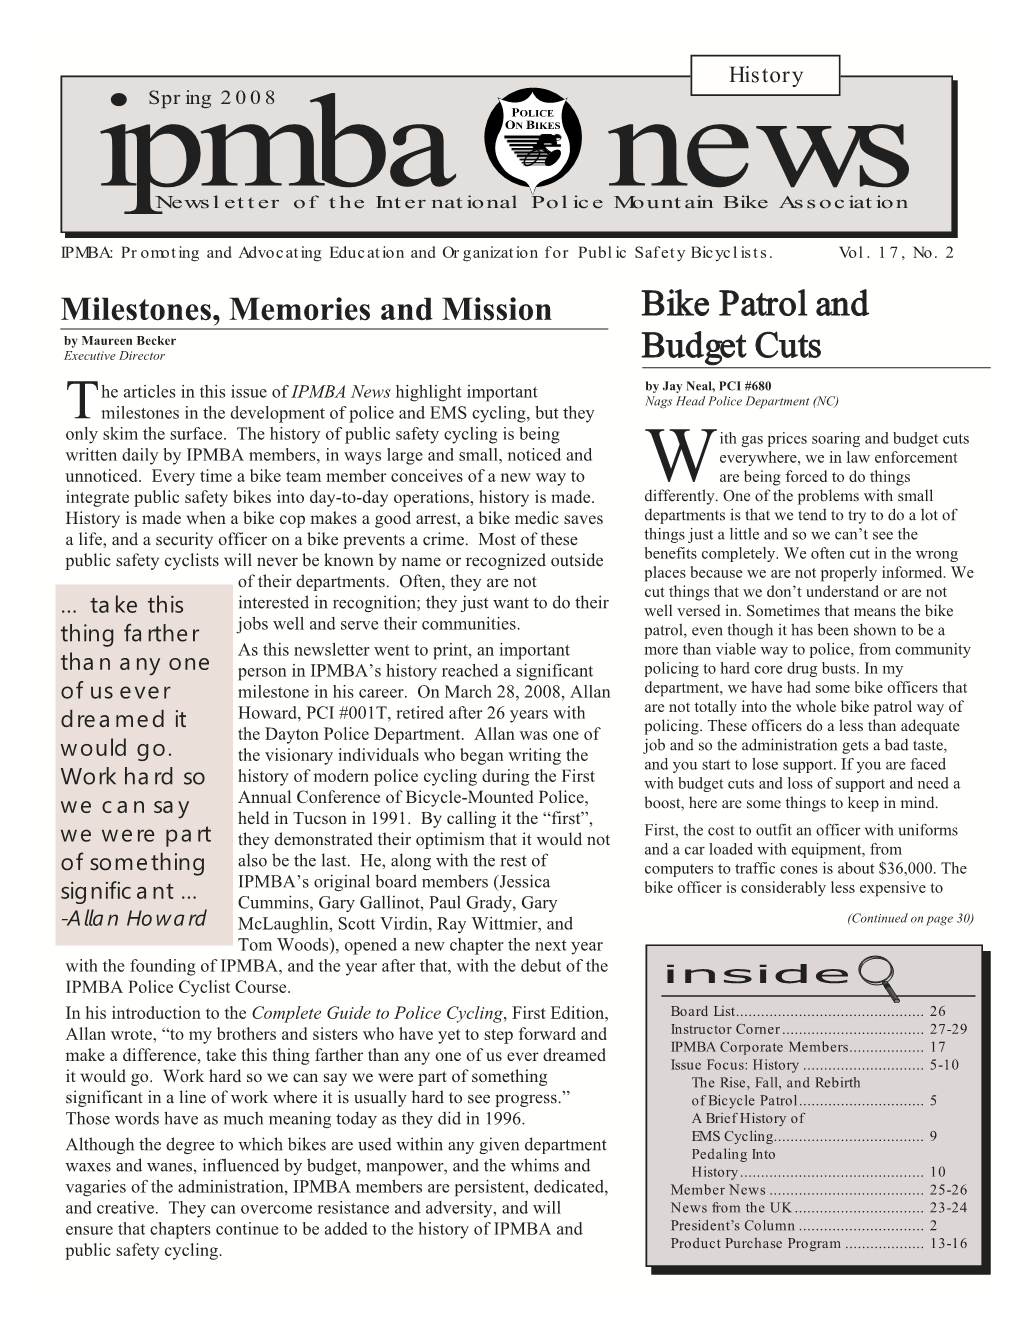 IPMBA News Vol. 17 No. 2 Spring 2008